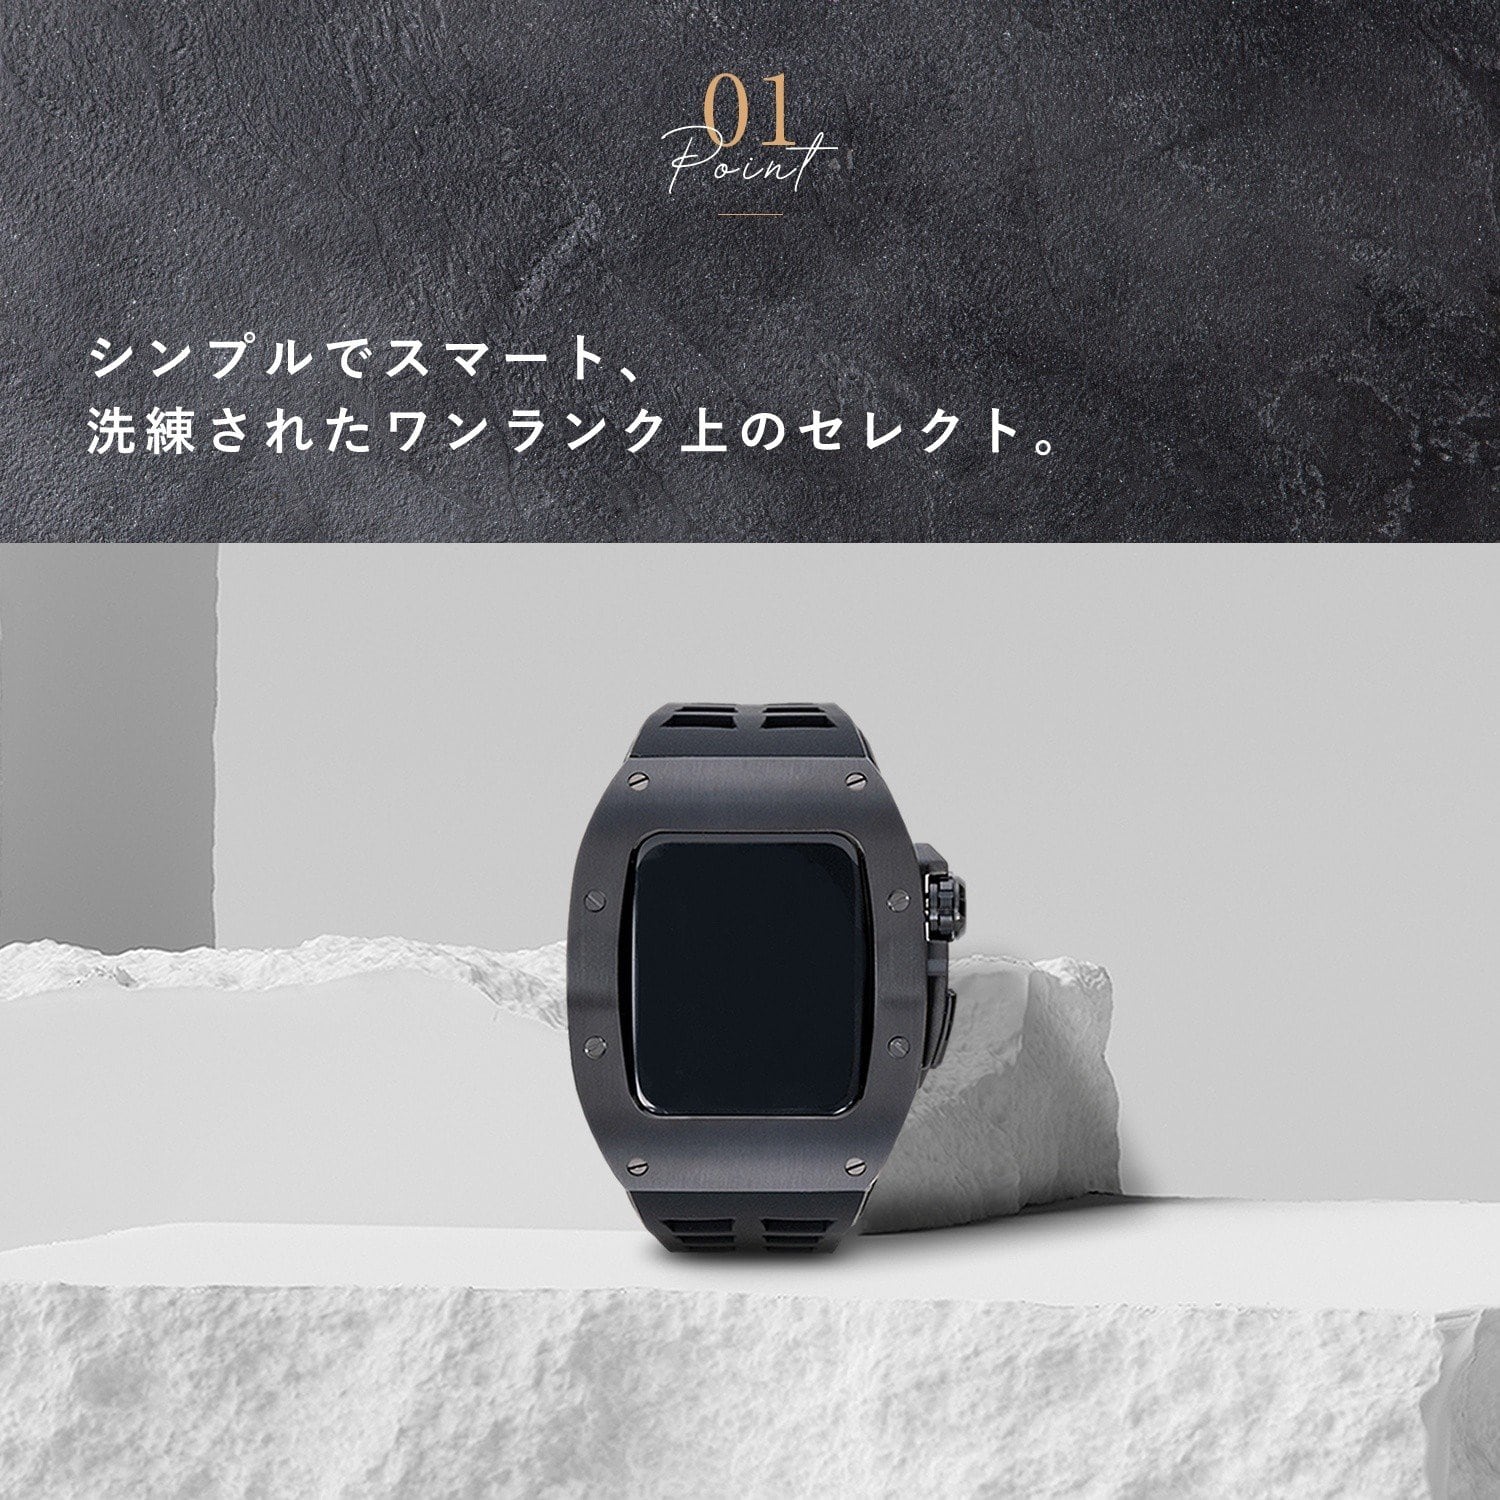 Luxury Apple Watch Case & Belt BR-AWC45BK ラグジュアリー アップル ウォッチ ケース＆ベルト ブラック  メンズ (バンド・カバーセット 44mm/45mm対応) カスタムパーツ 高級ケース | イッシンイチー powered by BASE